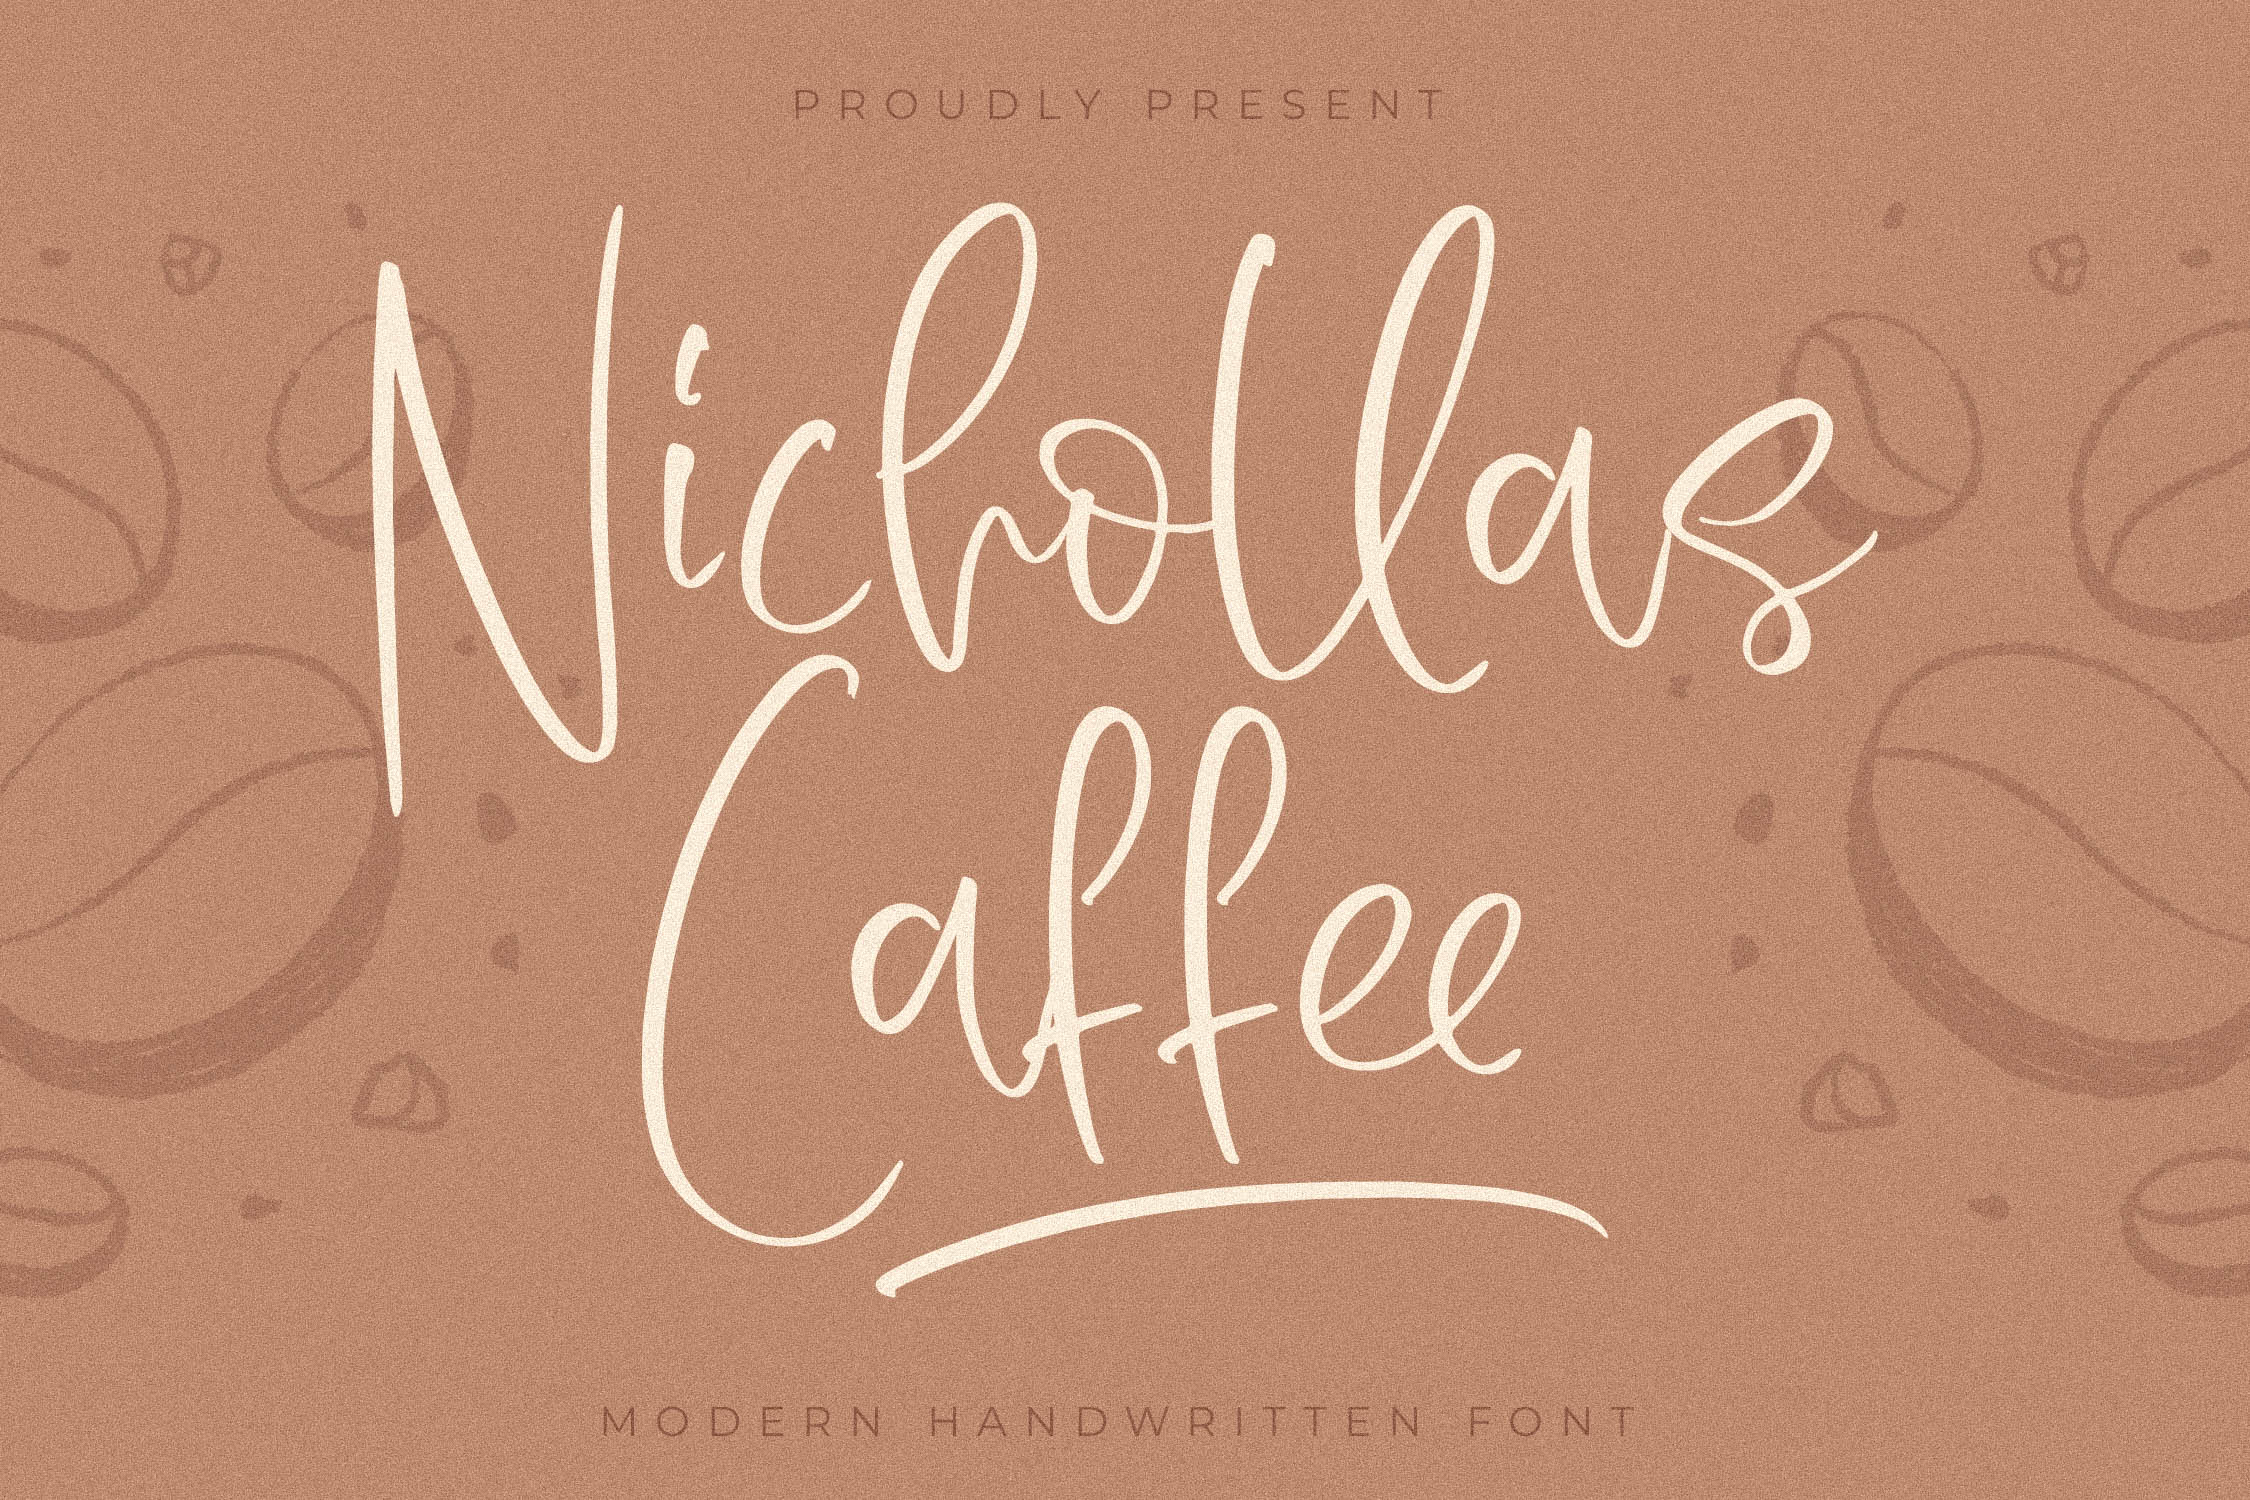 Nichollas Caffee Script Font